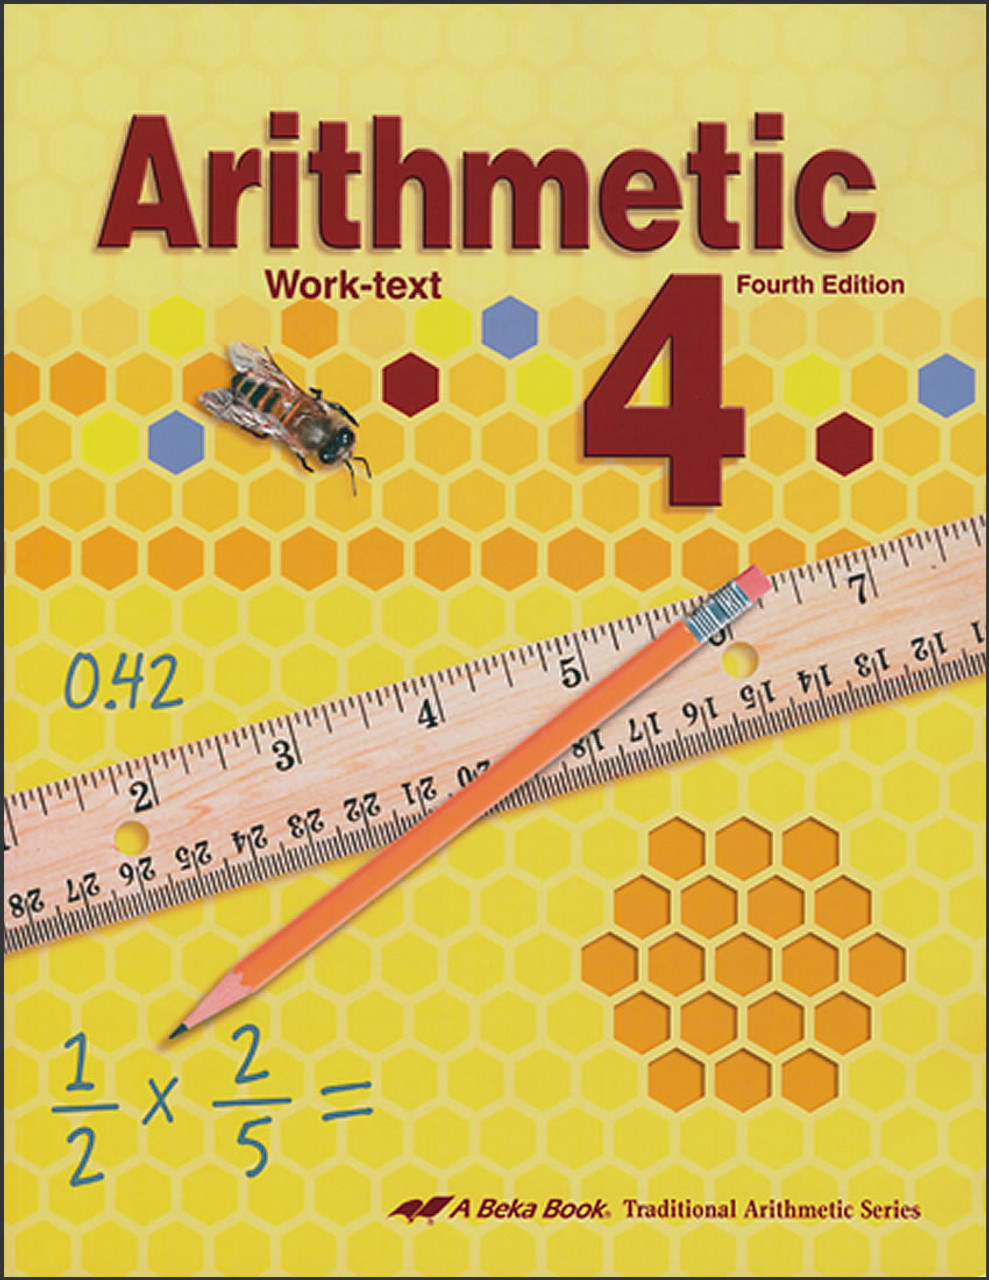 Arithmetic 4, 4th edition